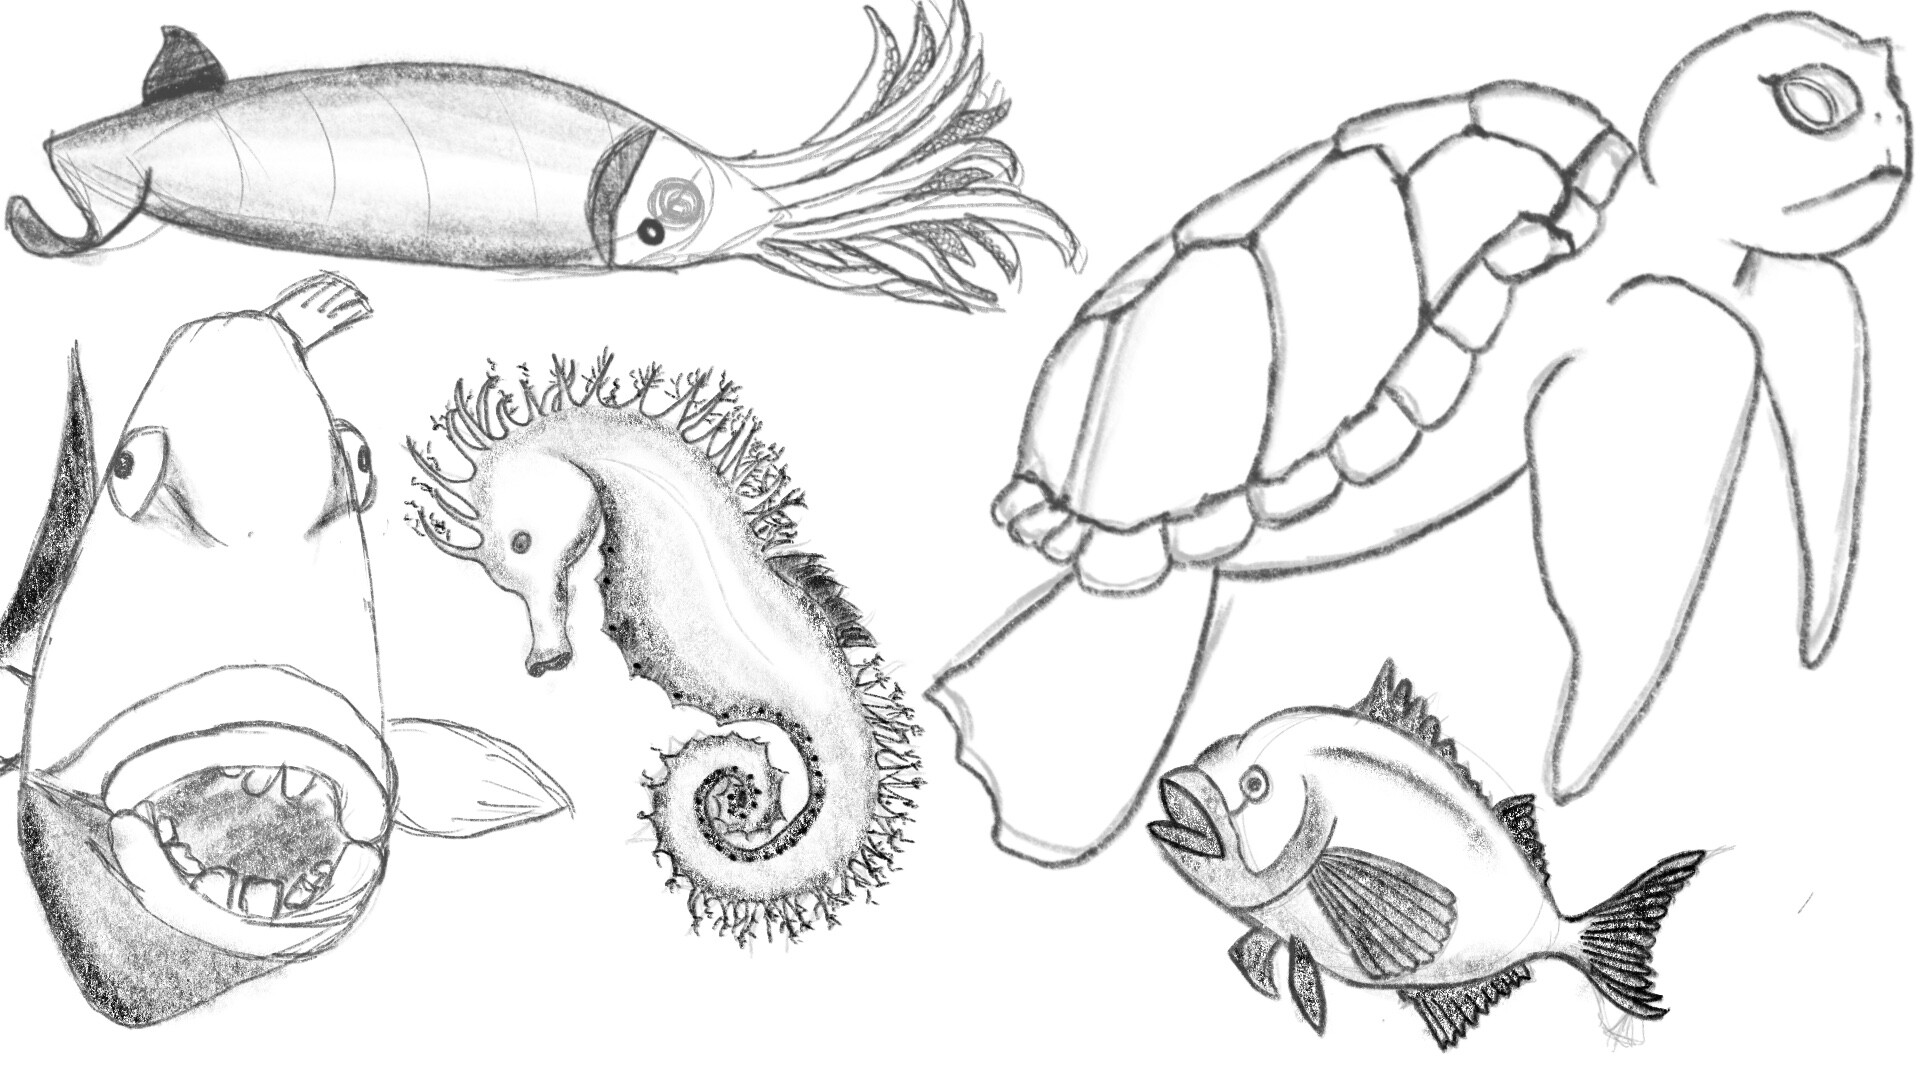 ArtStation - Quick sea animal sketches